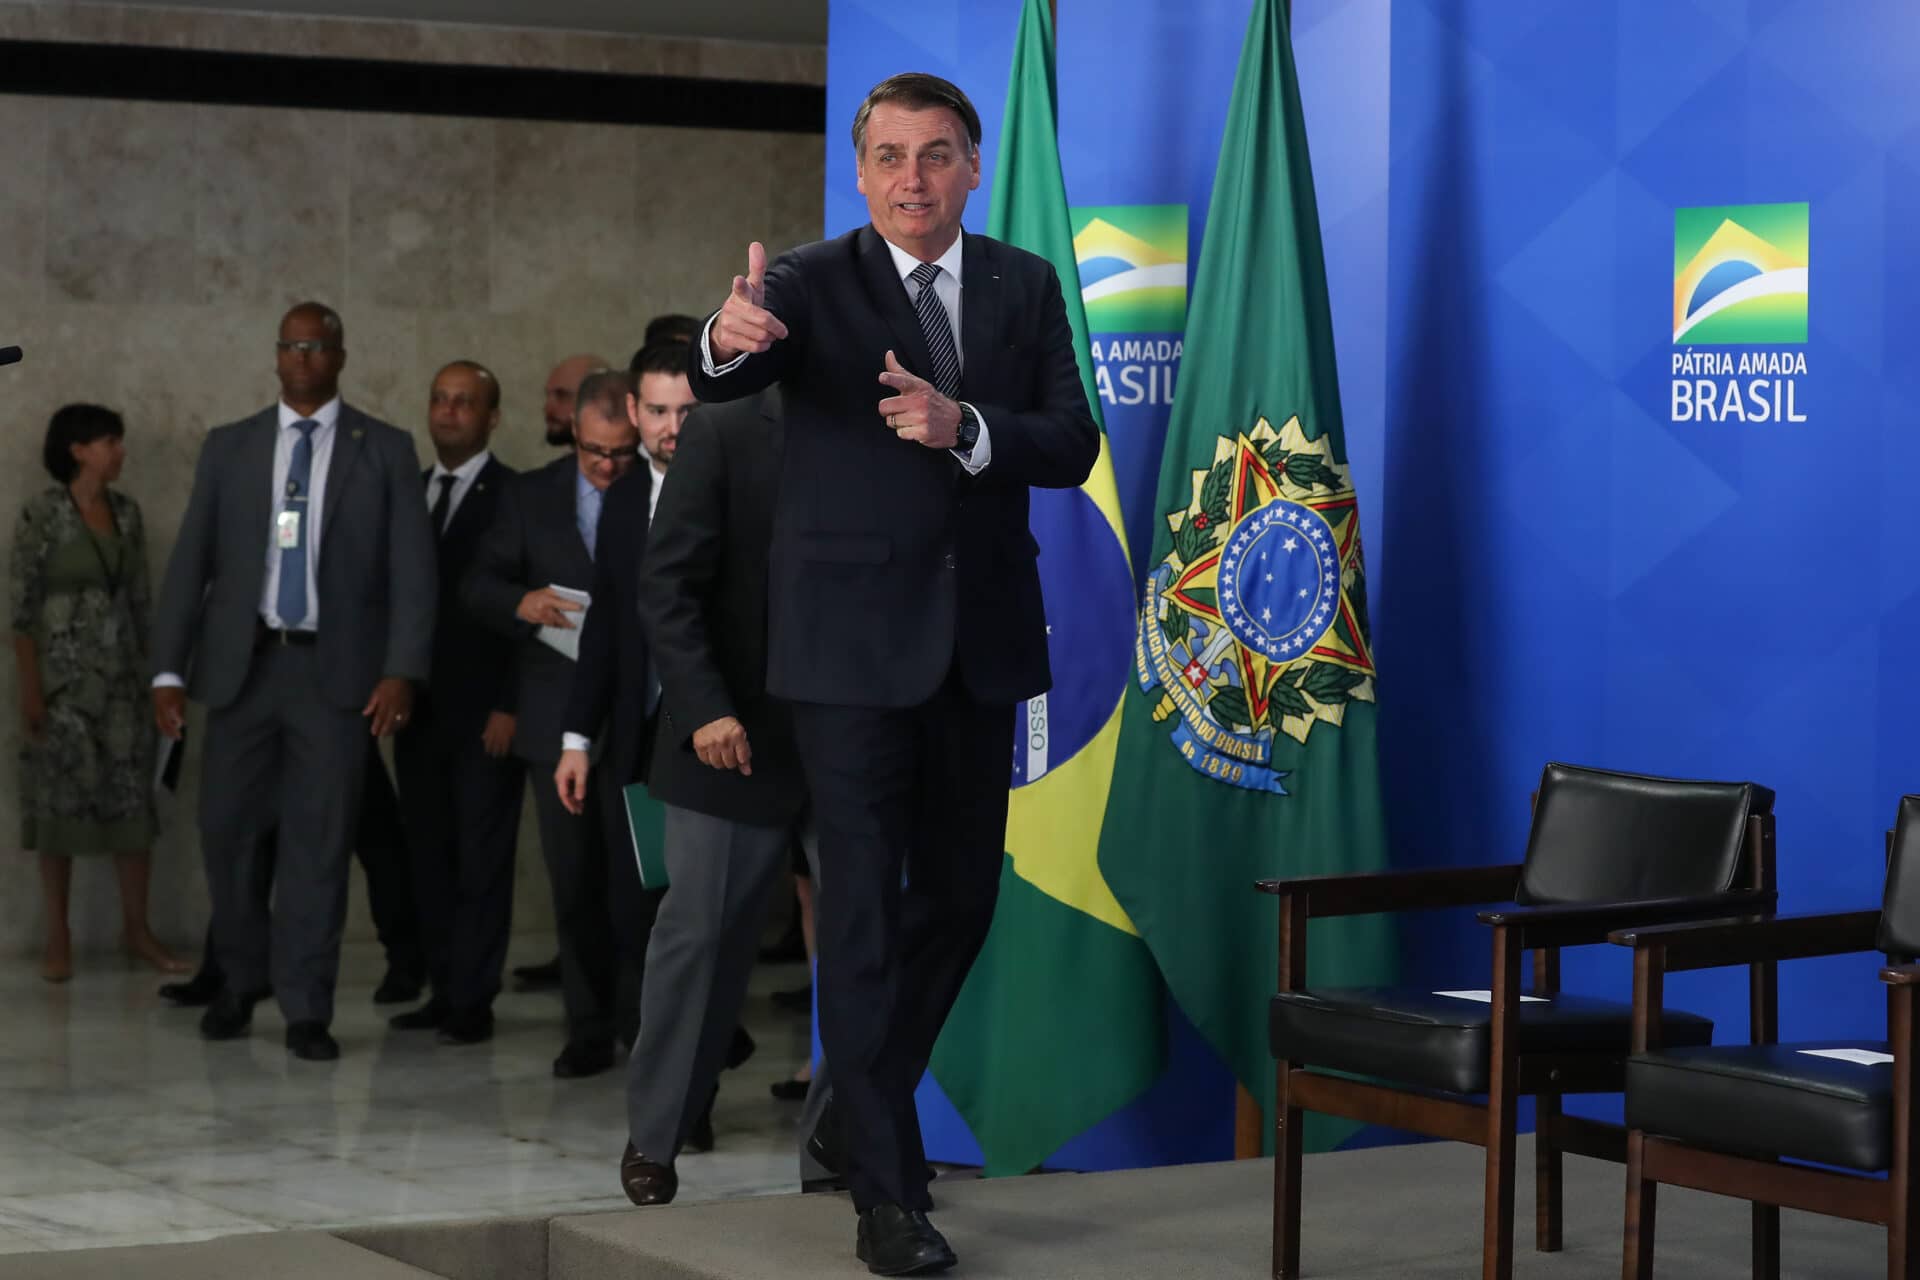 Brazil President Jair Bolsonaro making handgun gesture